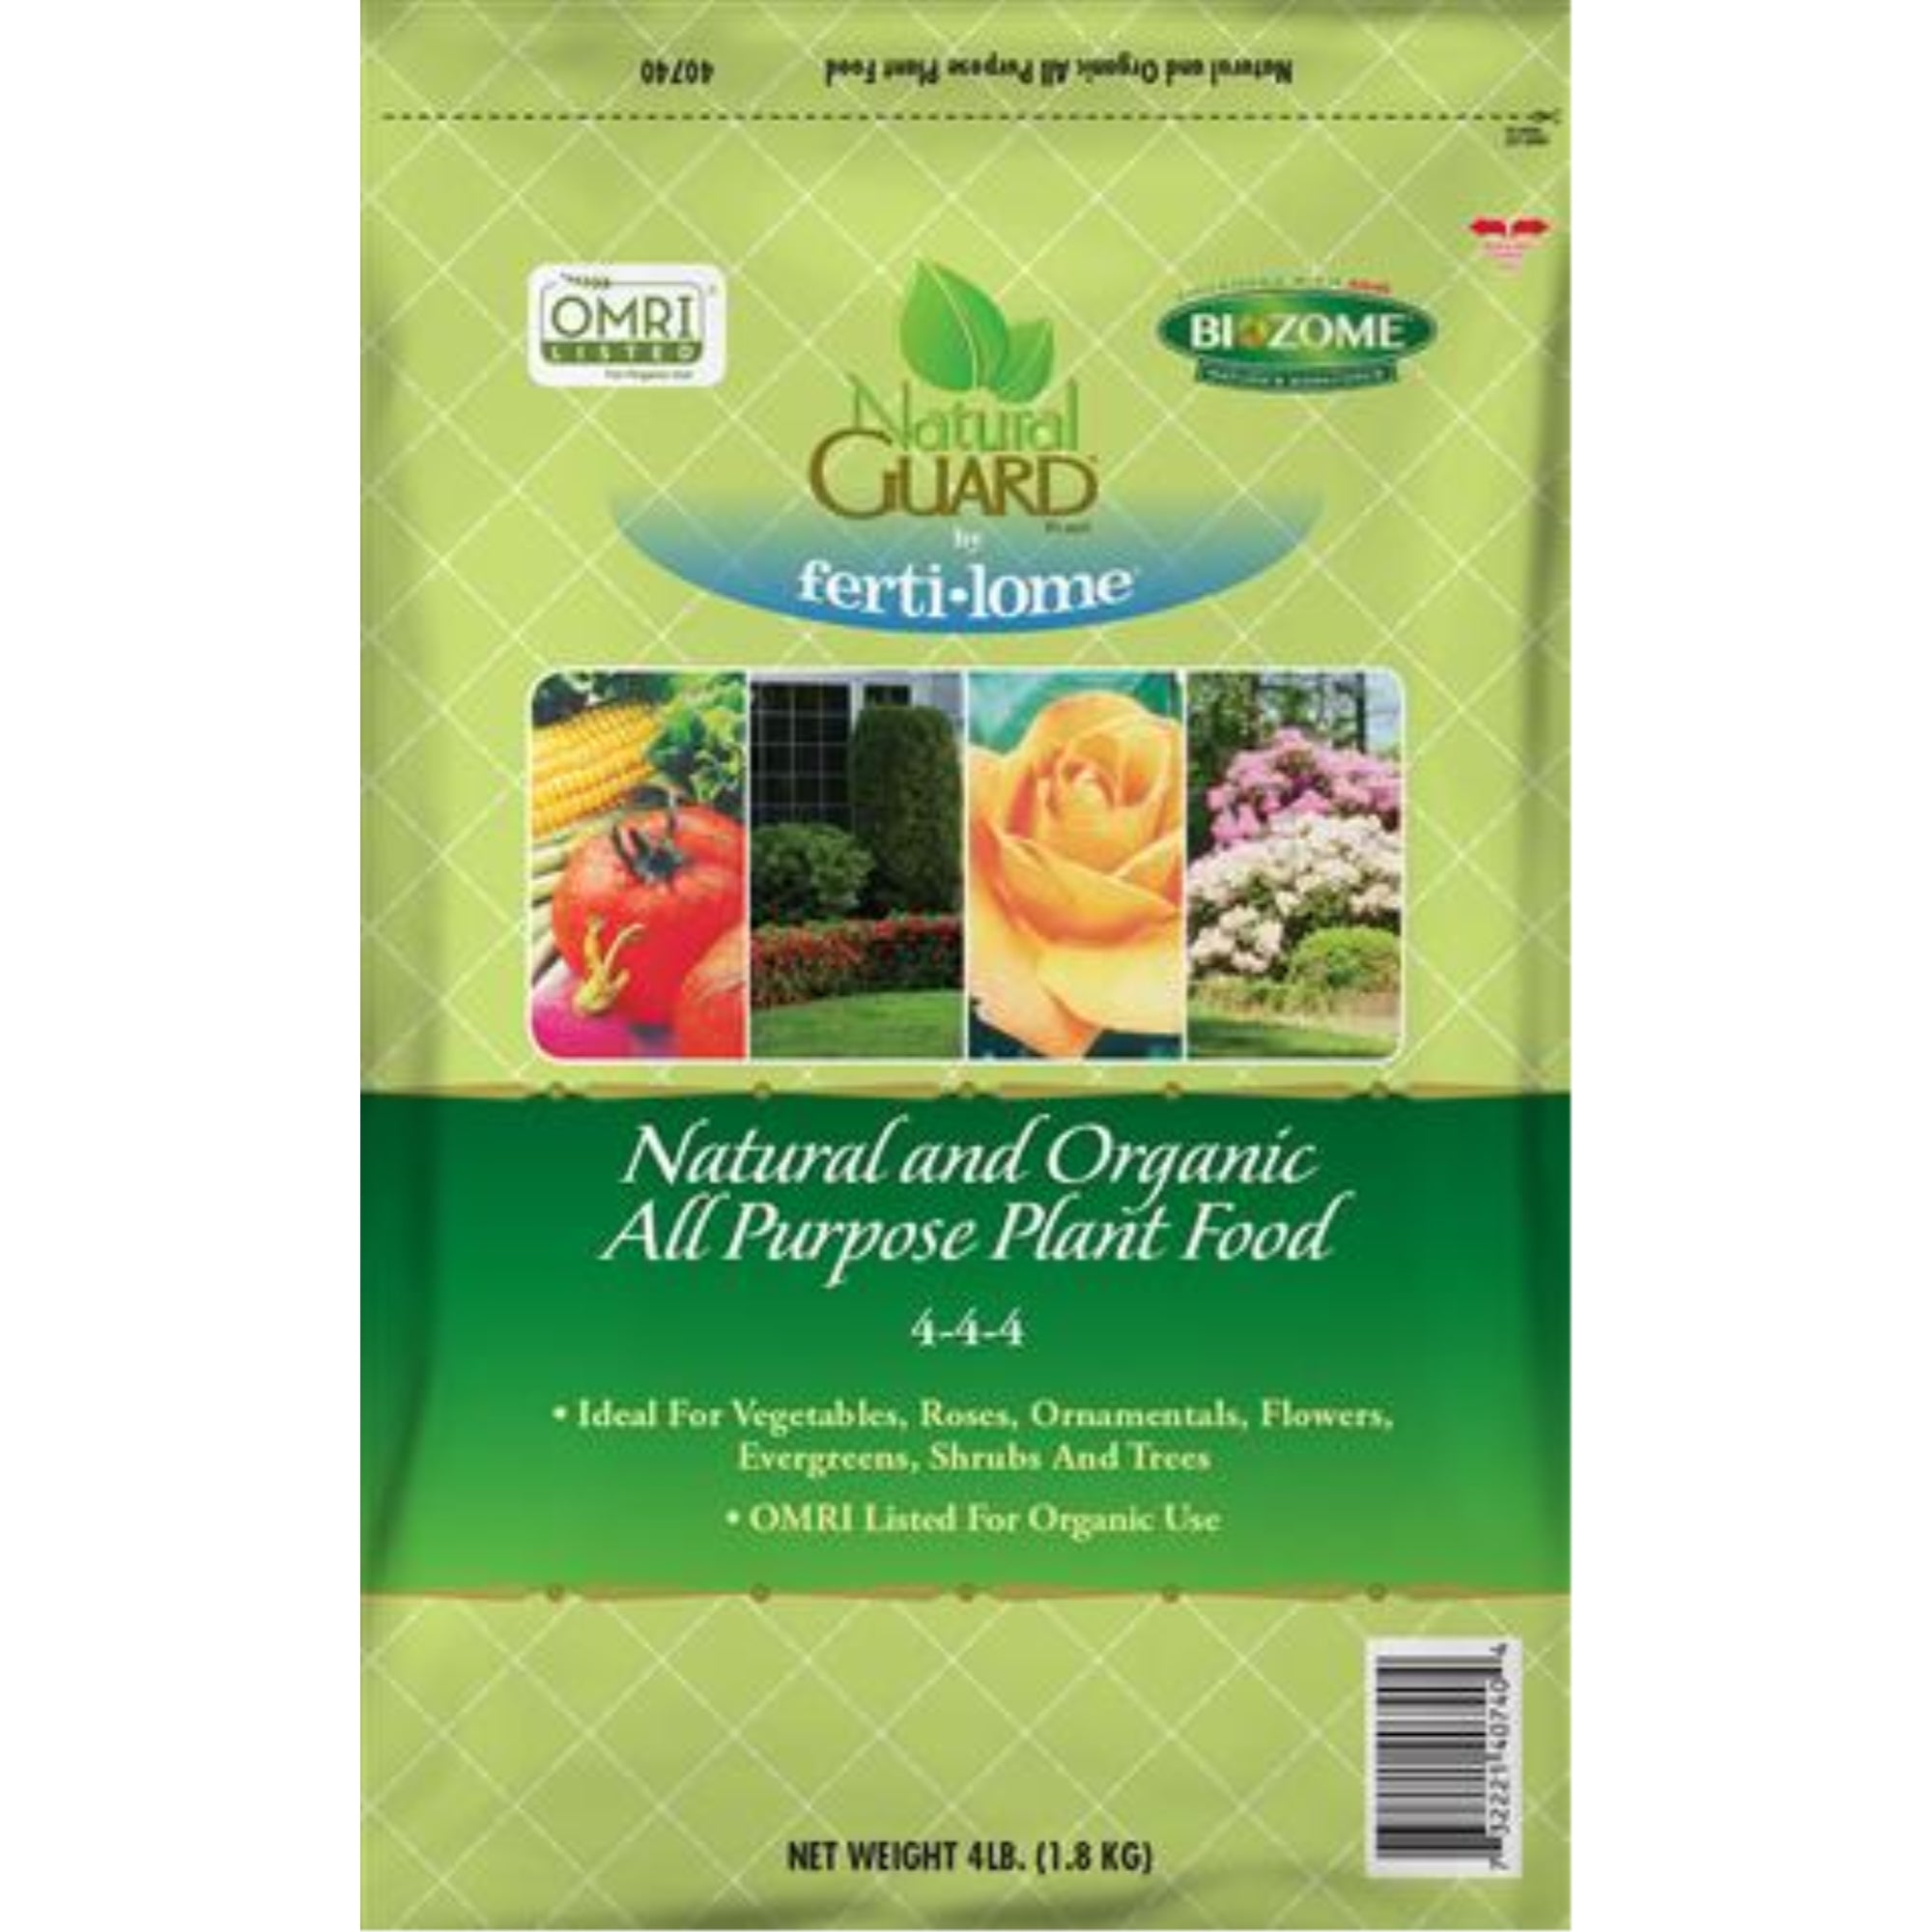 Fertilome Natural Guard Natural and Organic All Purpose Plant Food